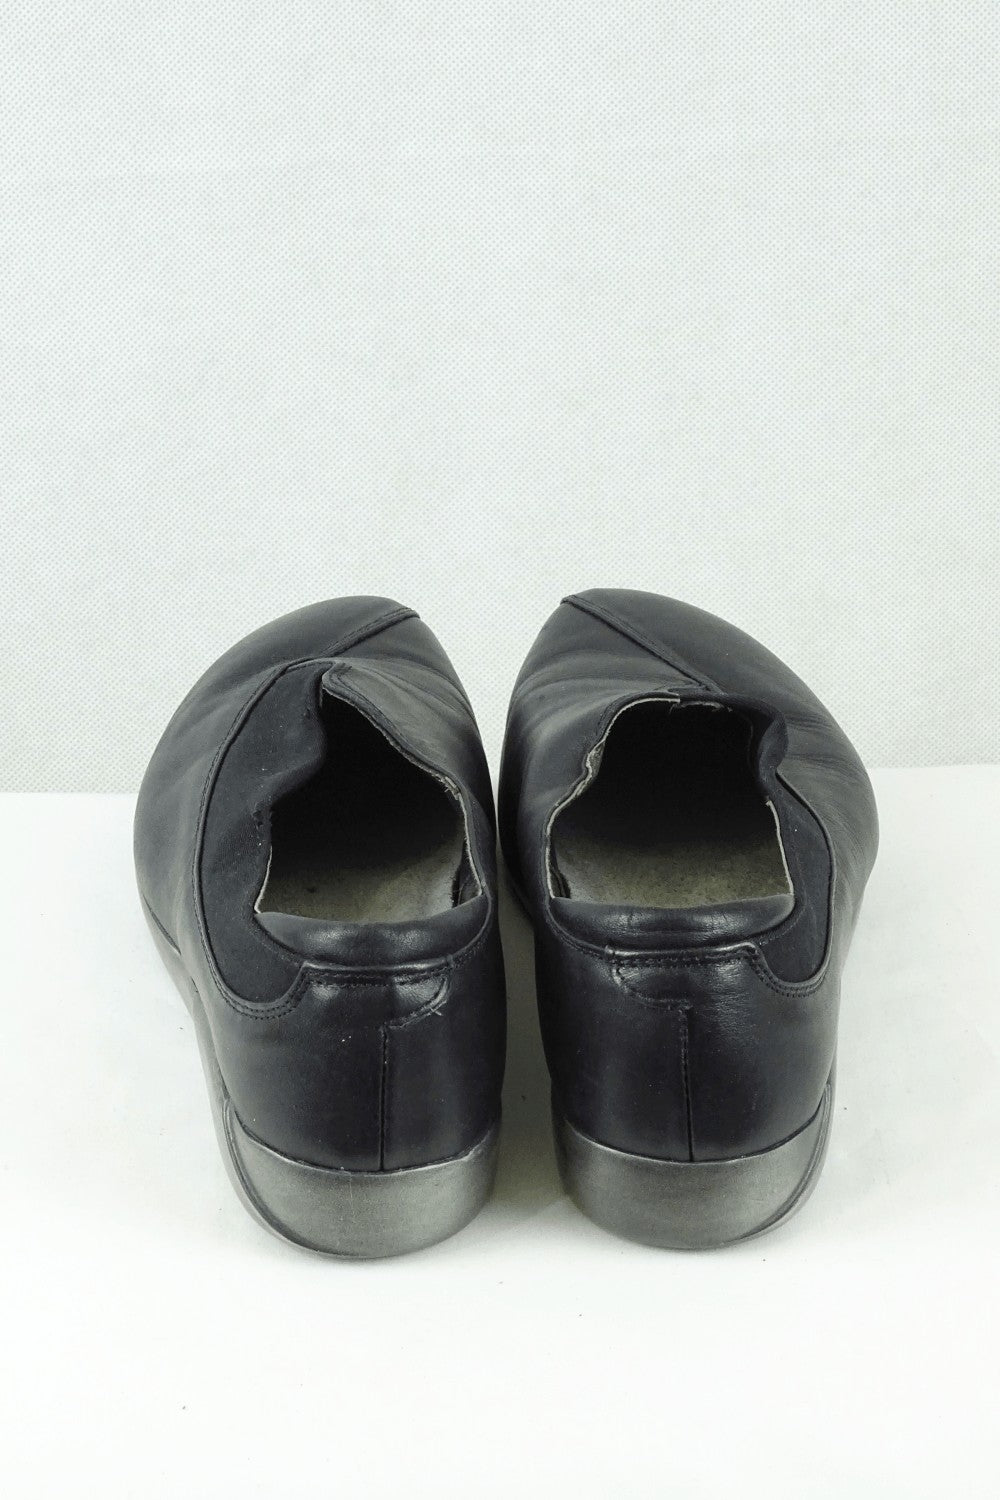 Naot Black Shoes 37